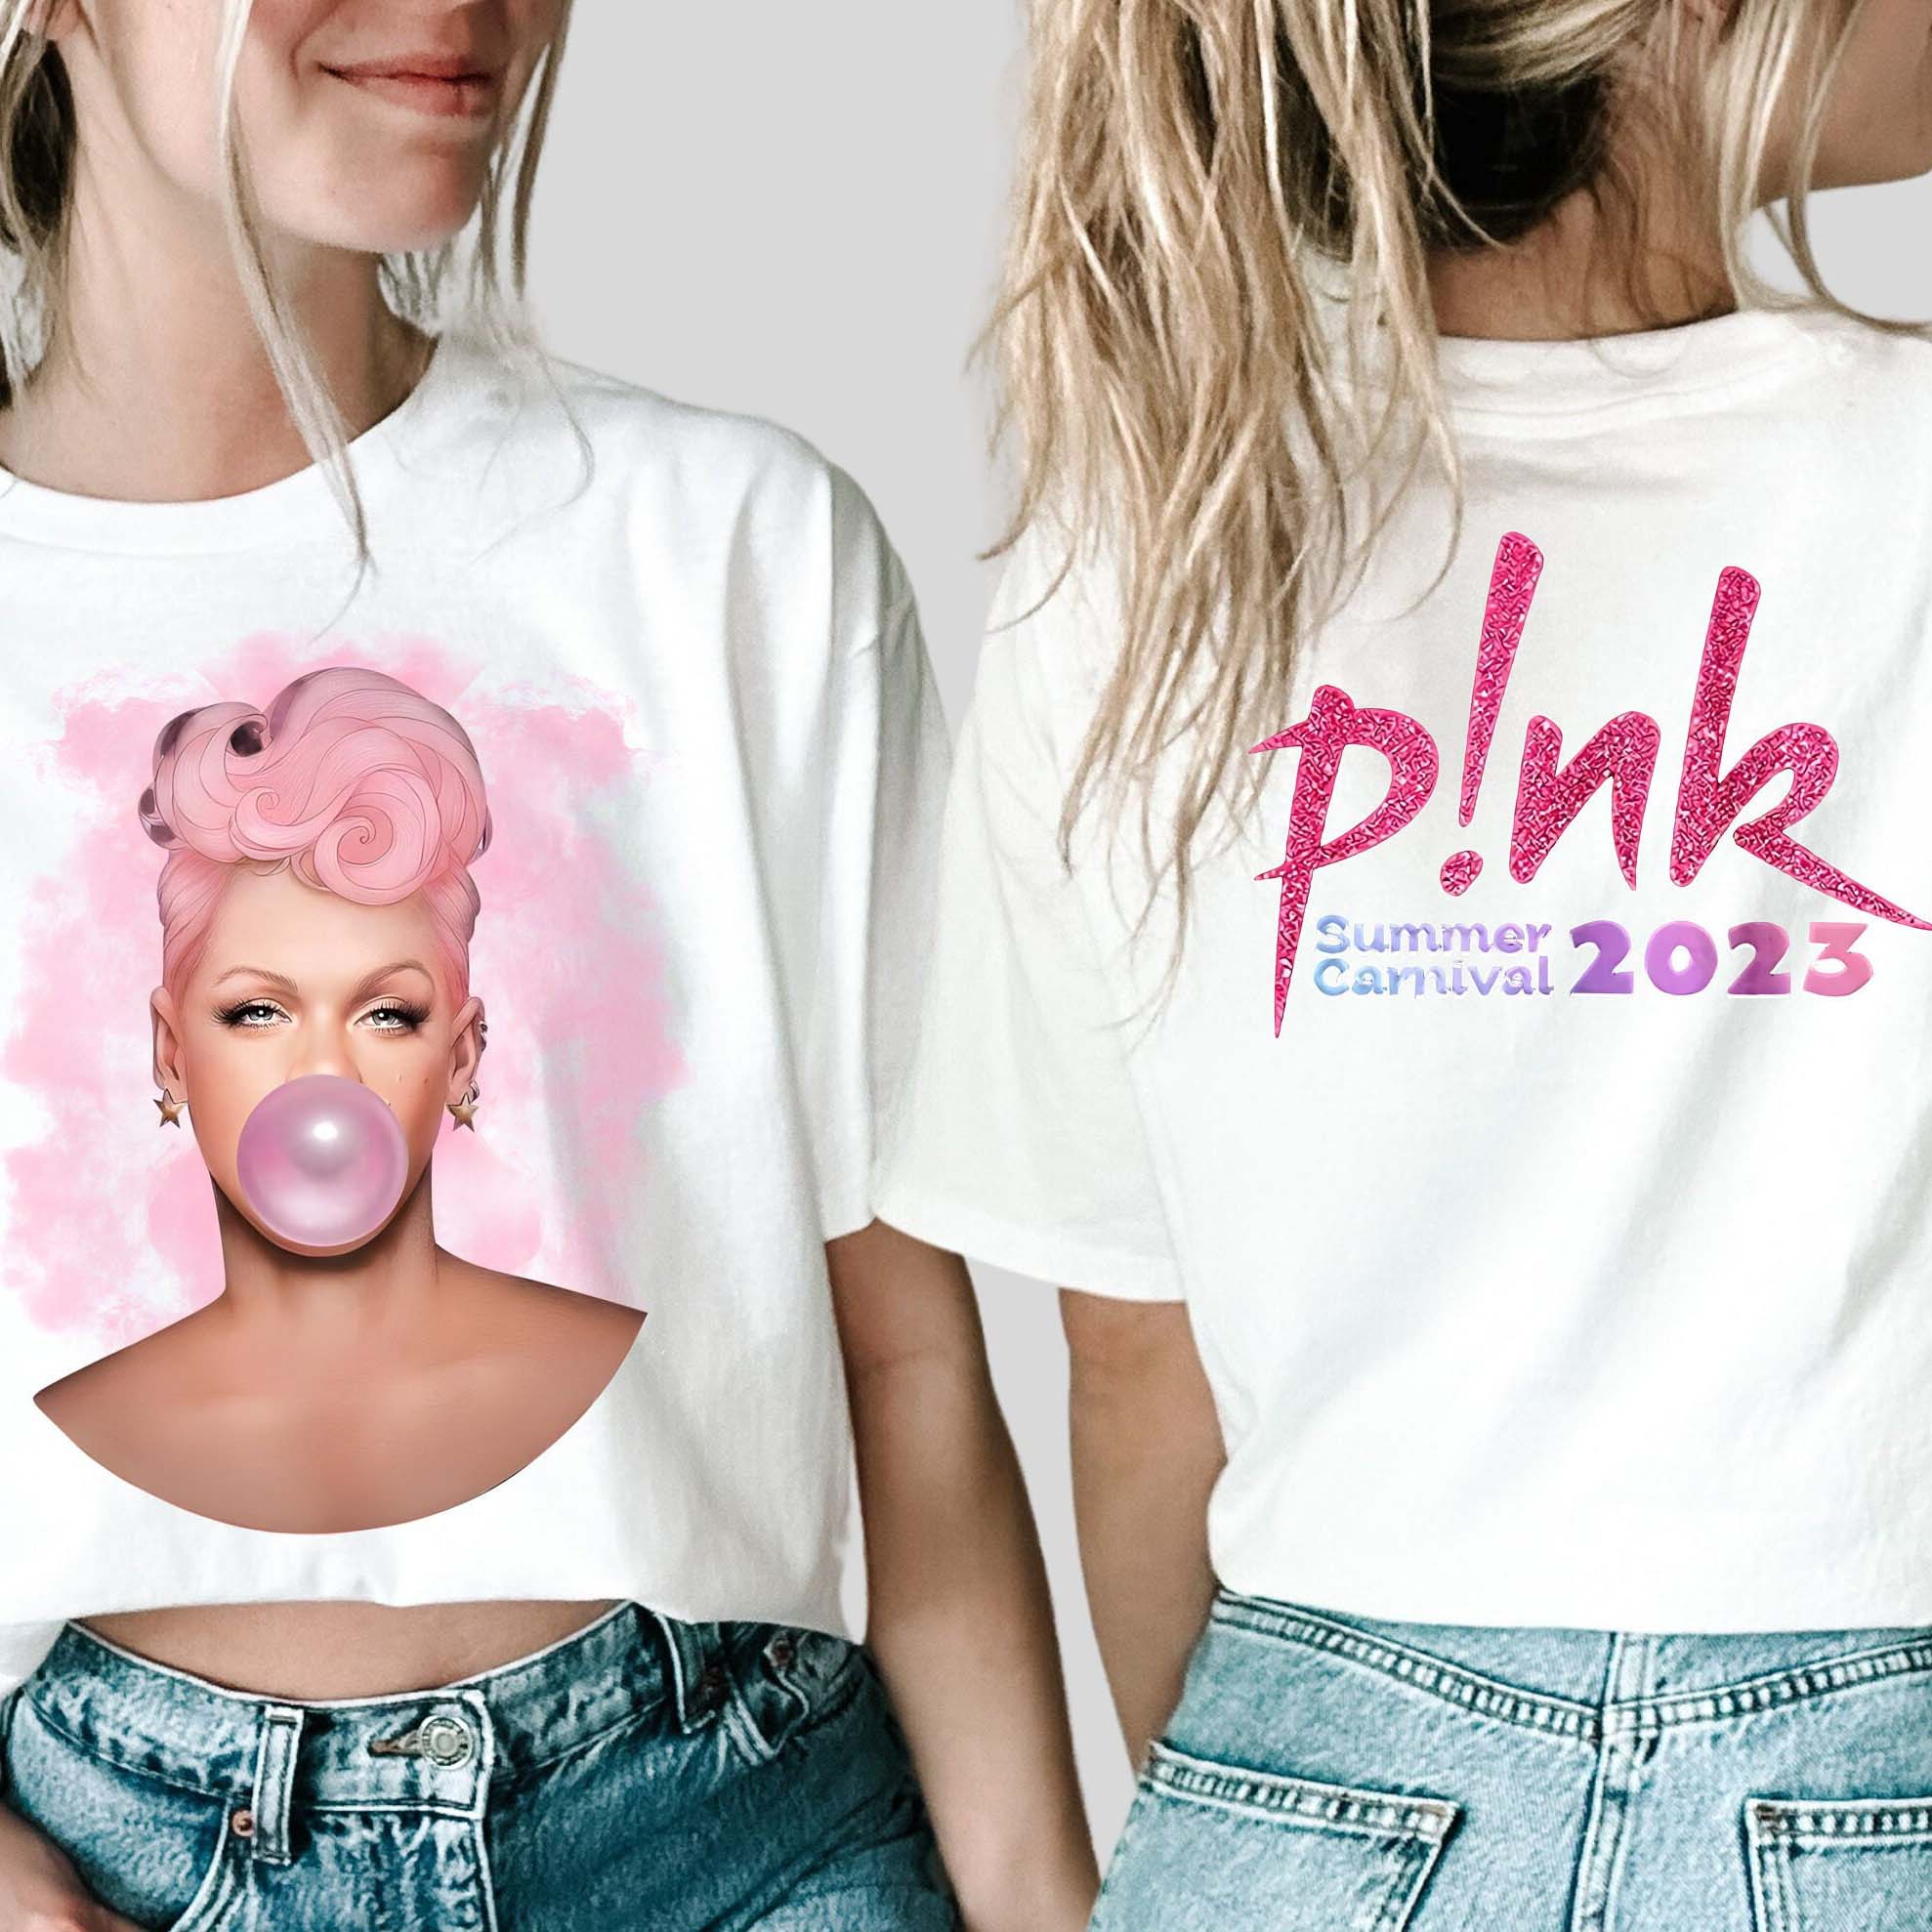 Pink Summer Carnival 2023 T-Shirt